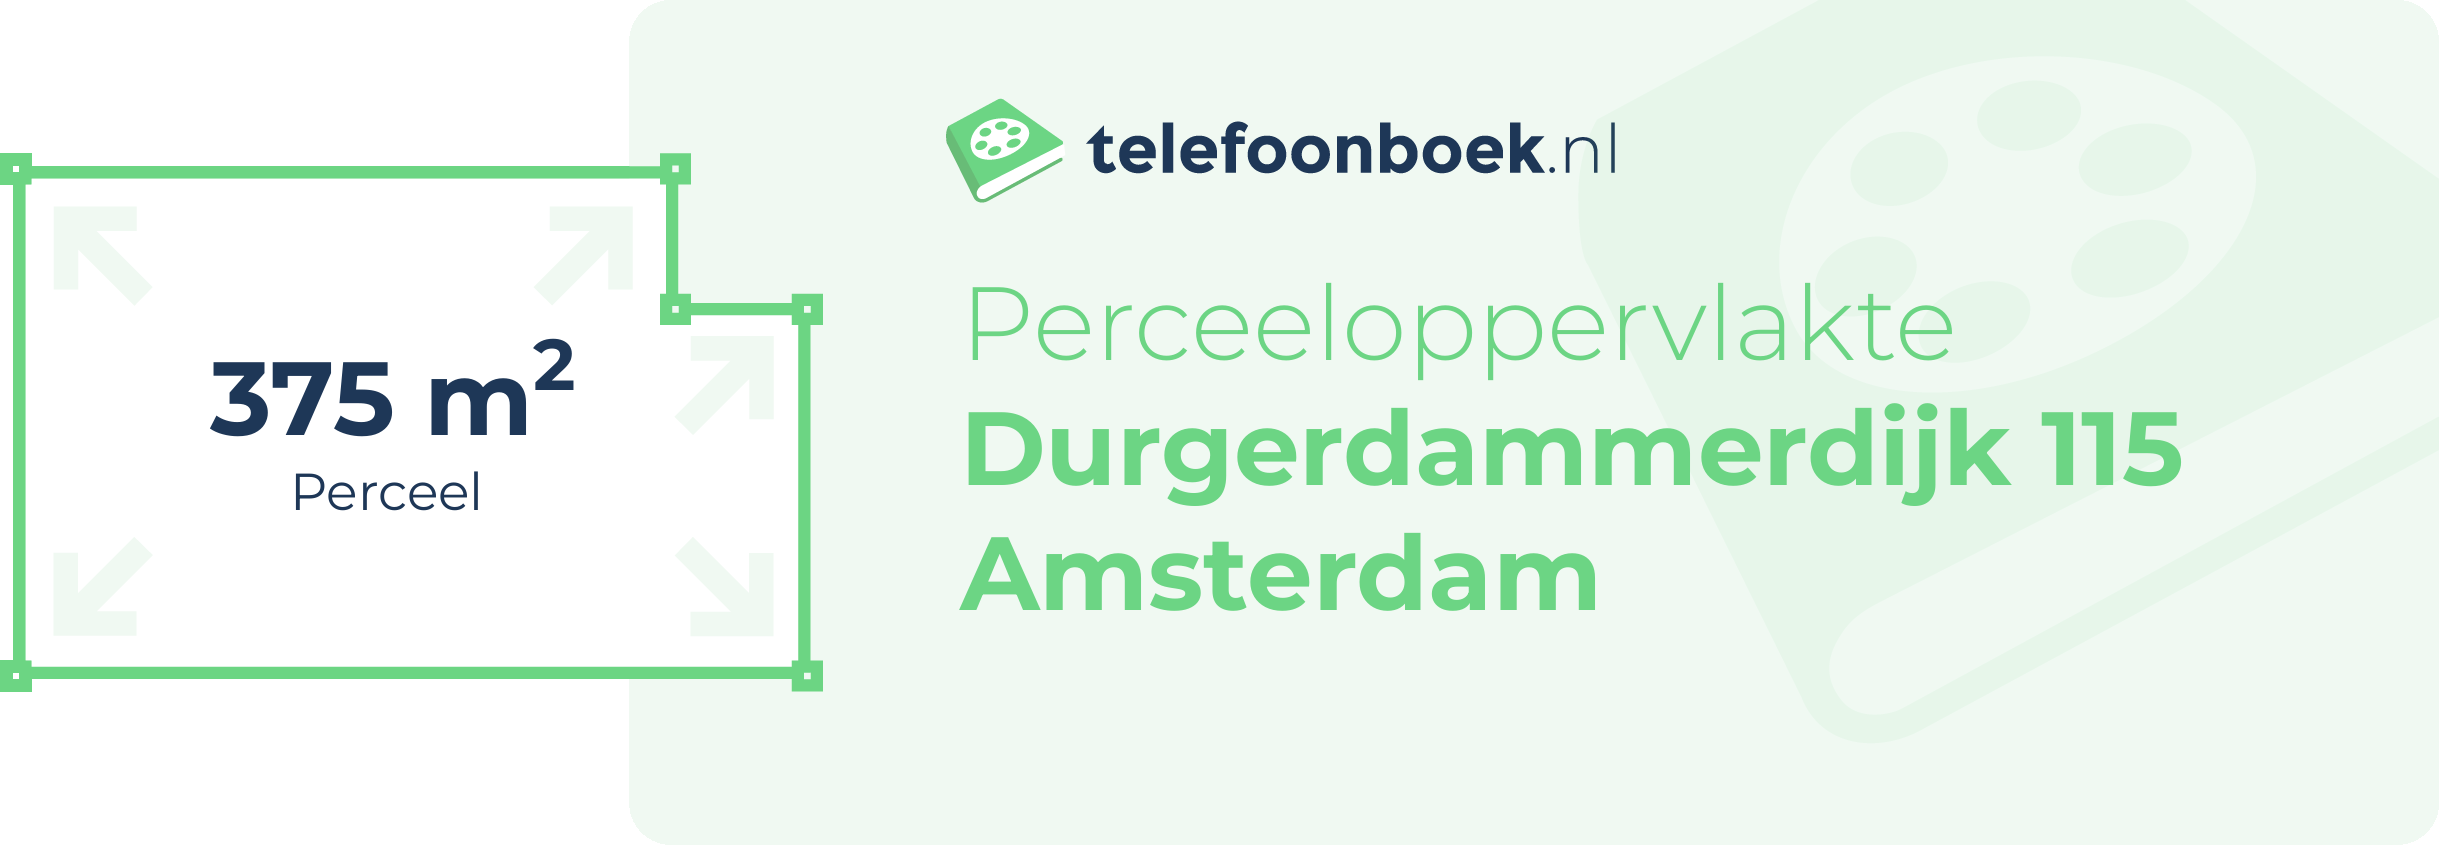 Perceeloppervlakte Durgerdammerdijk 115 Amsterdam